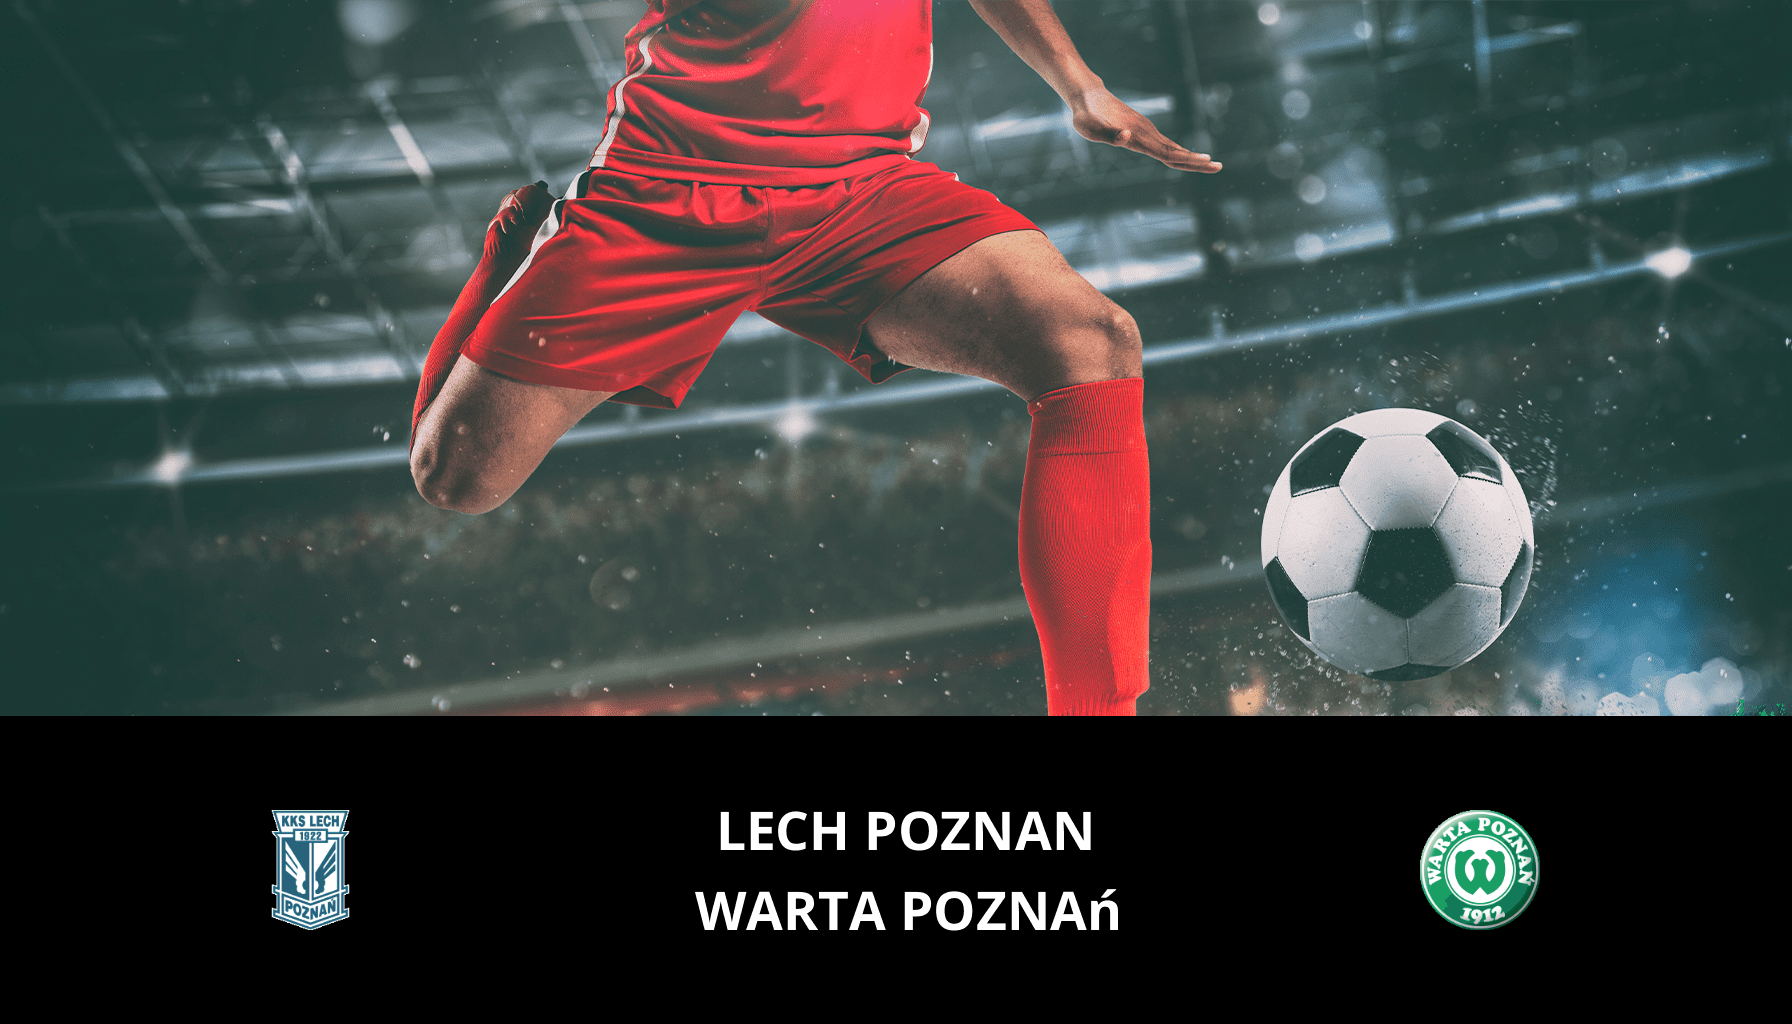 Previsione per Lech Poznan VS Warta Poznań il 15/03/2024 Analysis of the match